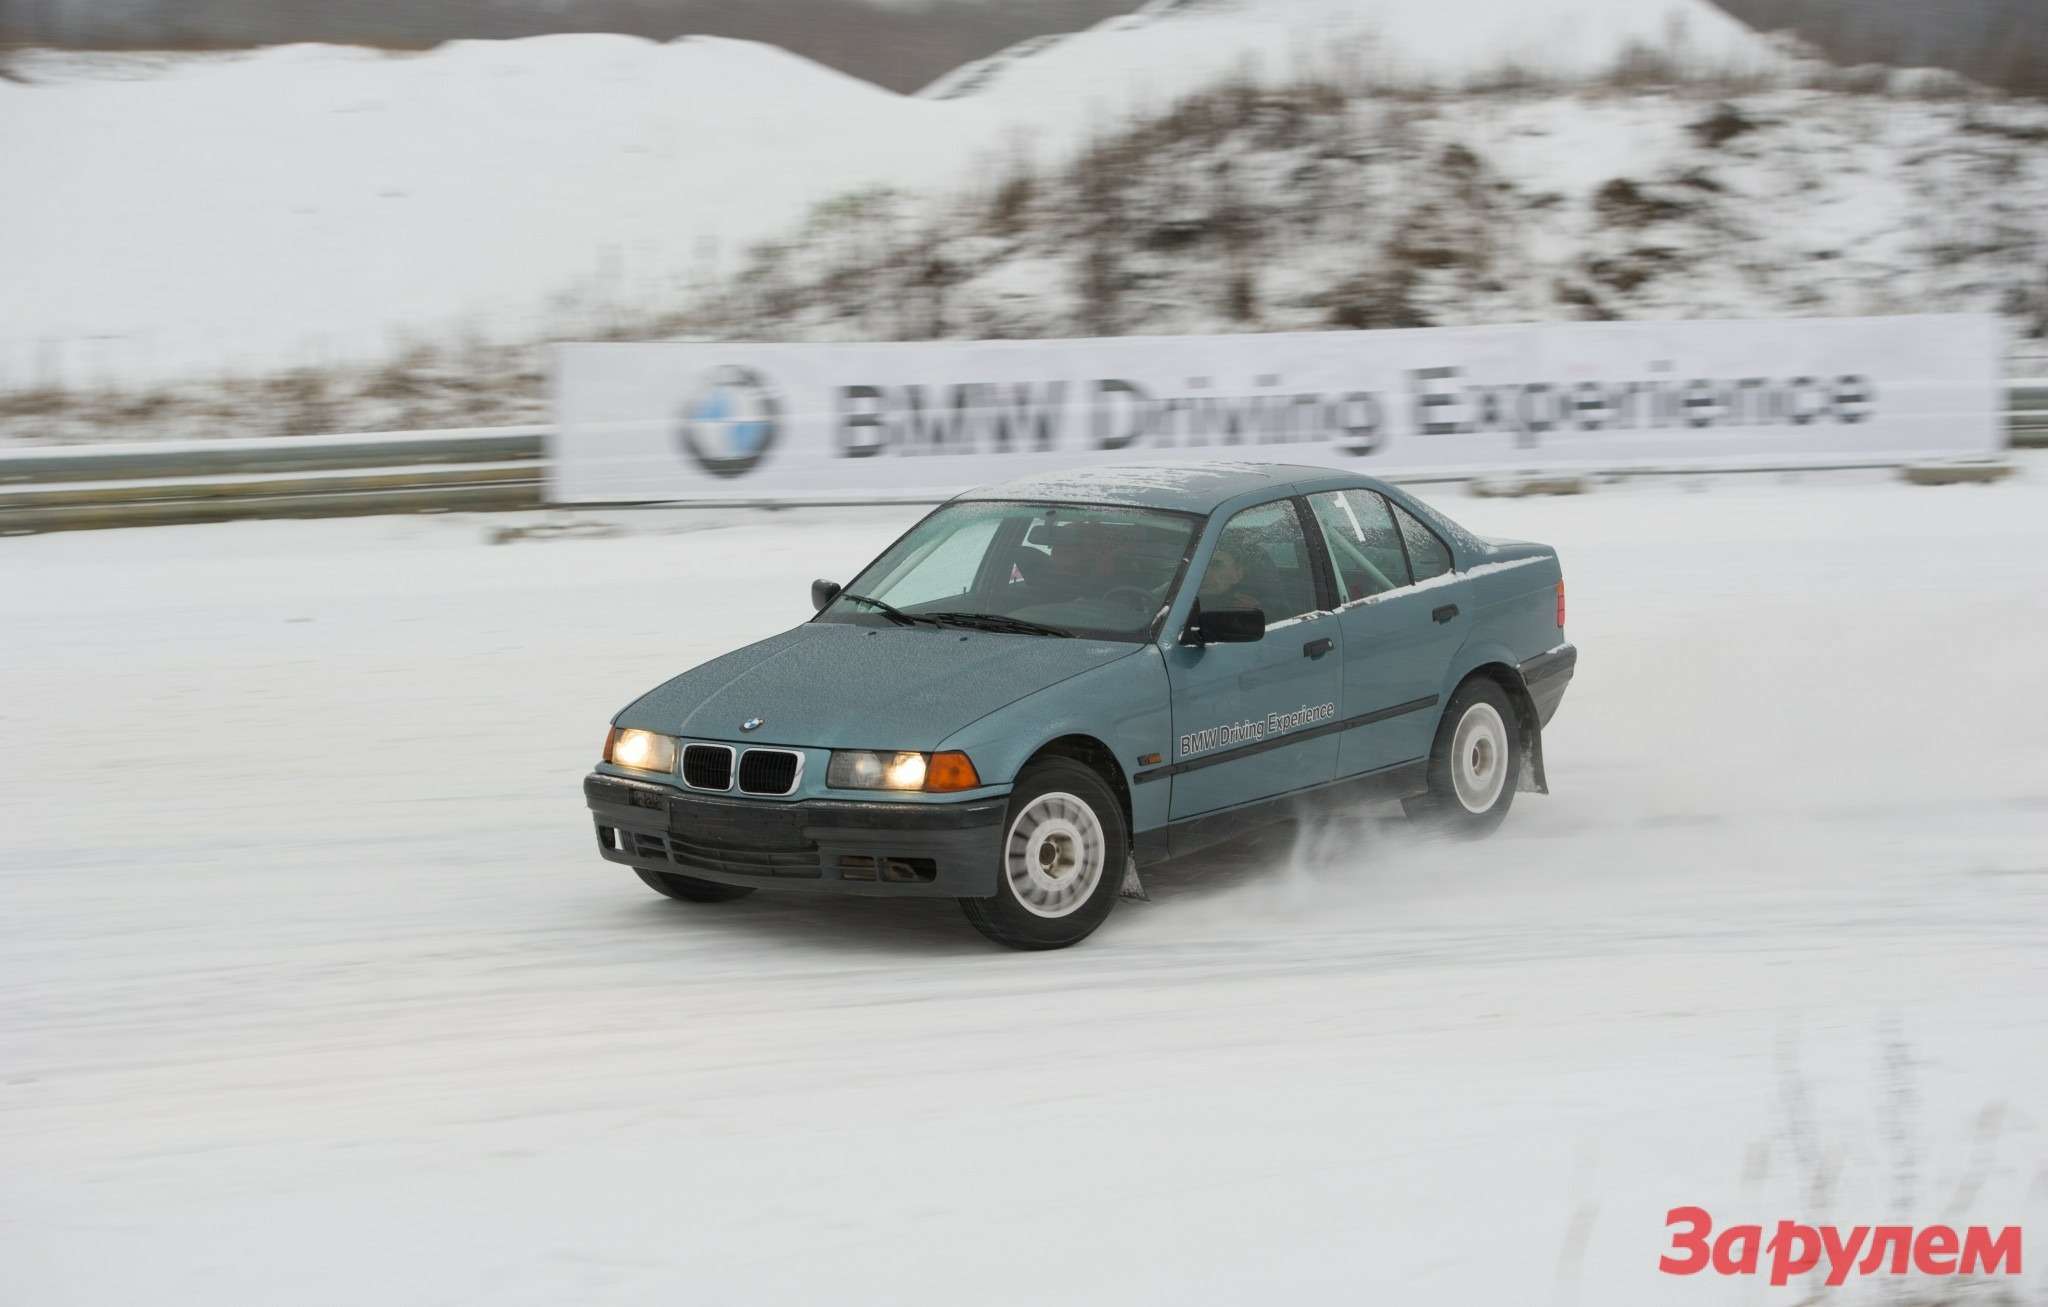 BMW xDrive to Rally (4)